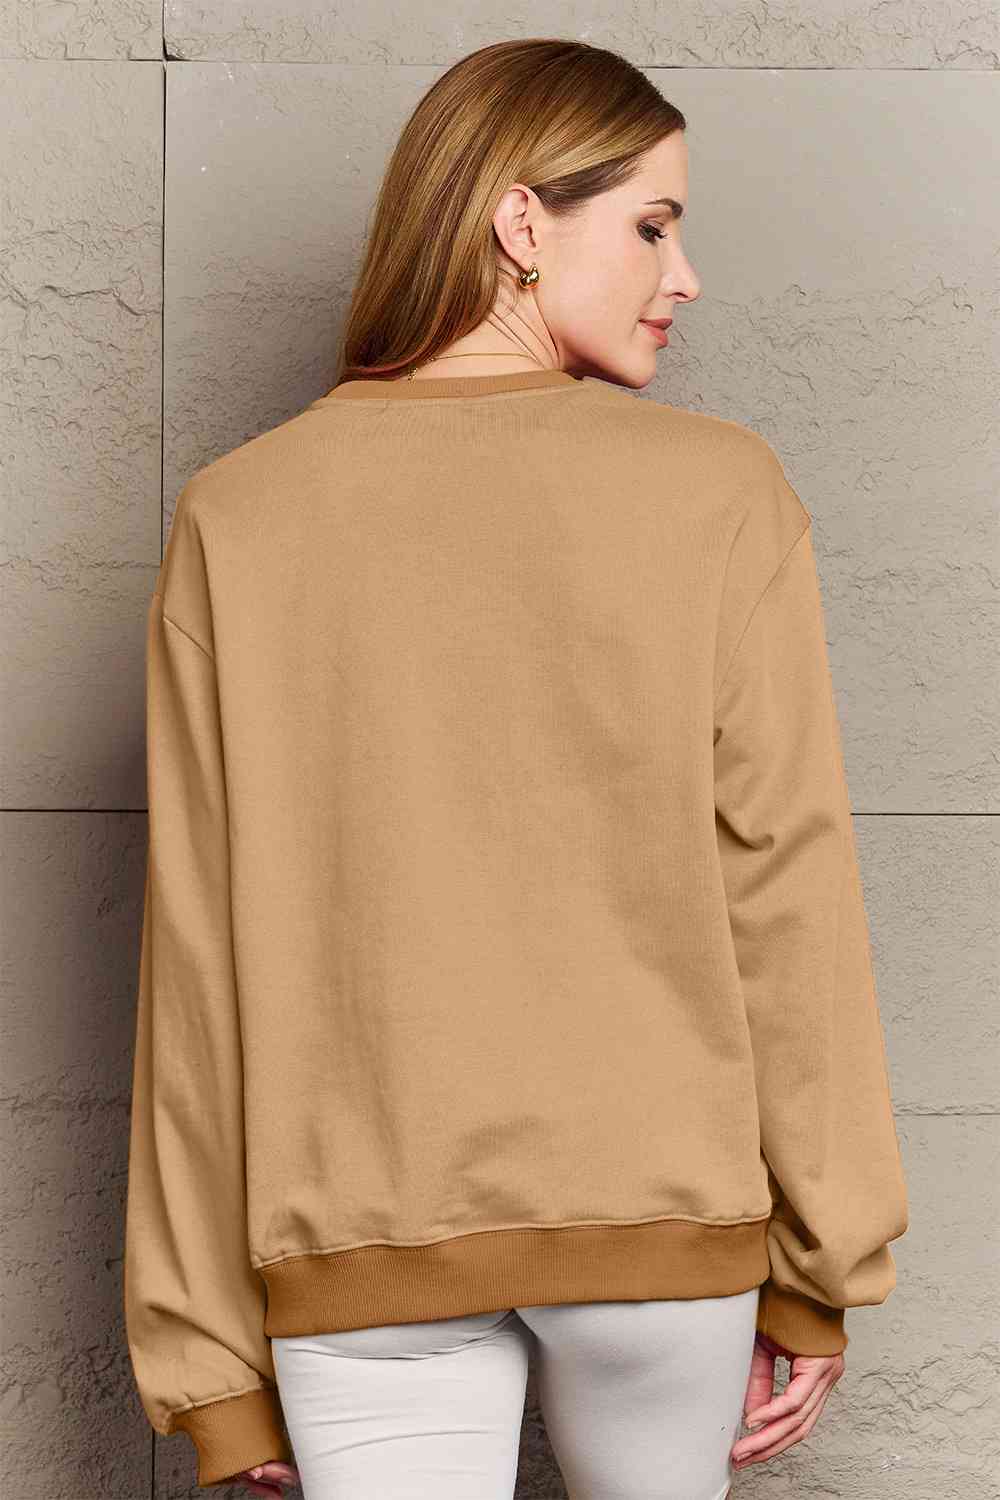 WEST COAST Graphic Long Sleeve Sweatshirt